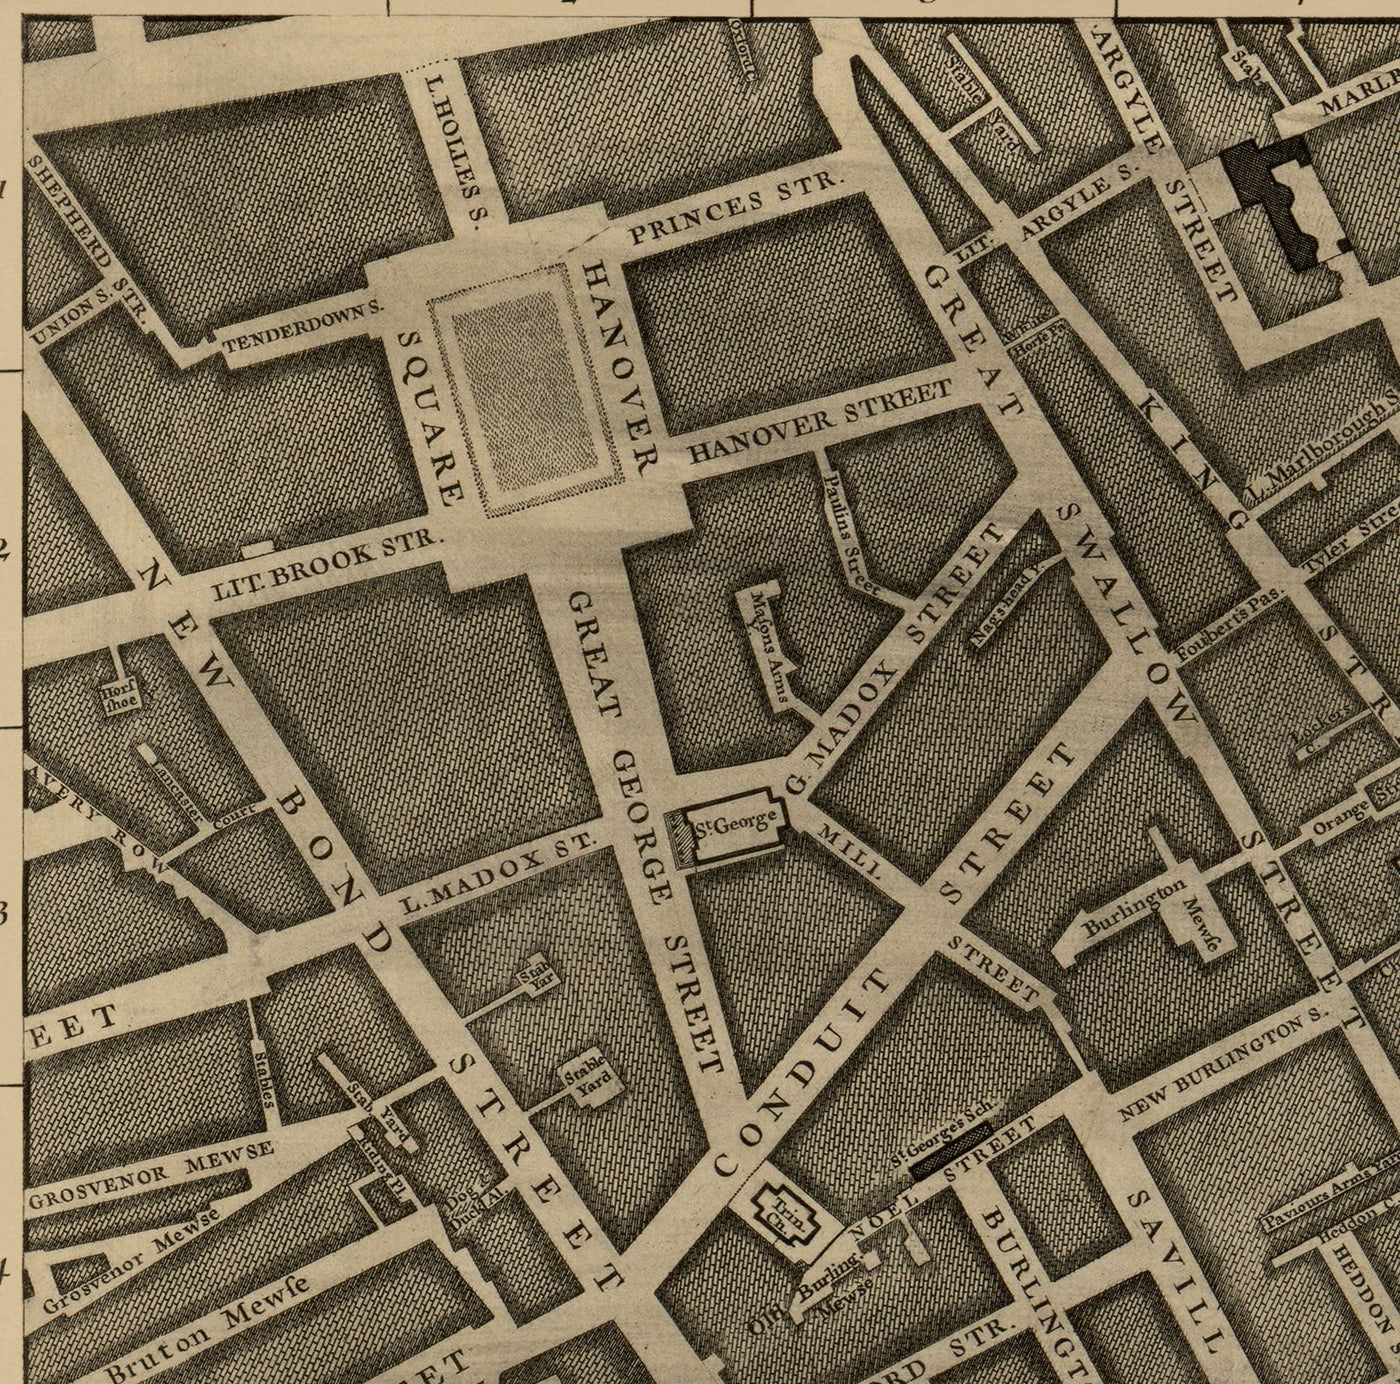 Viejo mapa de Londres, 1746 de John Rocque - B2 - Buckingham Palace, Soho, Westminster, Mayfair, Piccadilly, Green Park, Regents Street